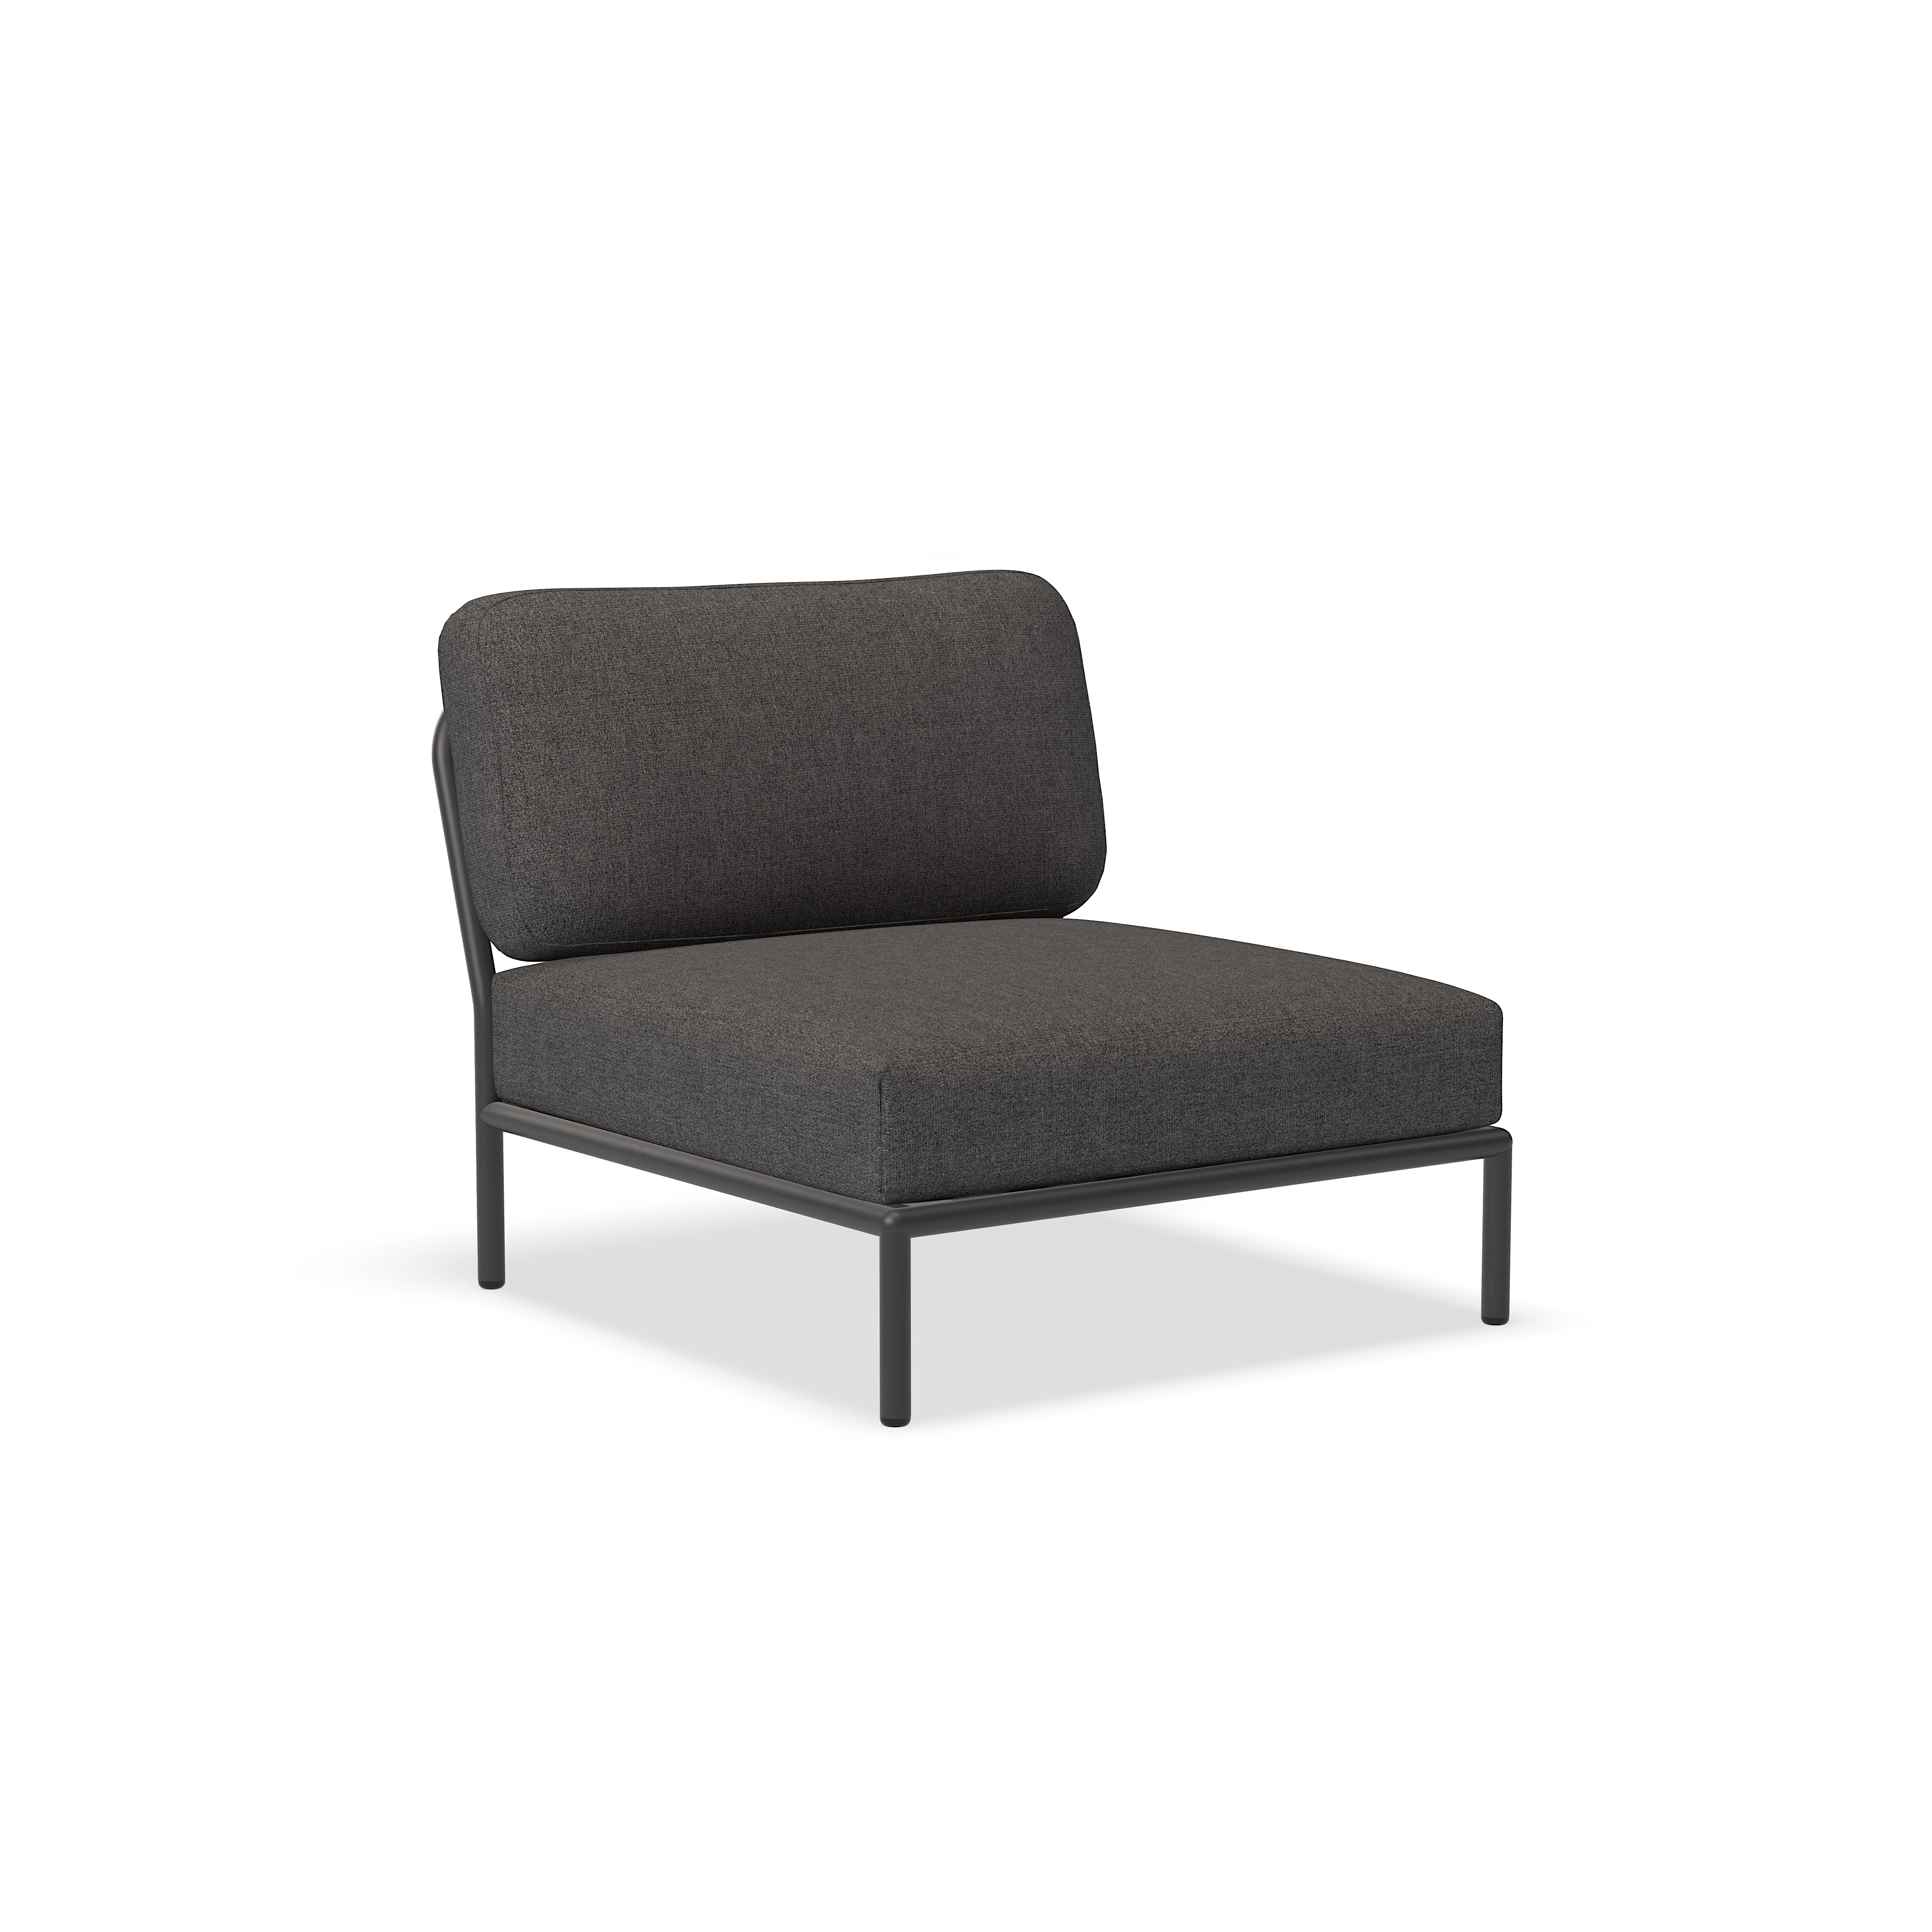 الكرسي - 12205-9851 - كرسي ، رمادي غامق (BASIC) ، هيكل رمادي غامق